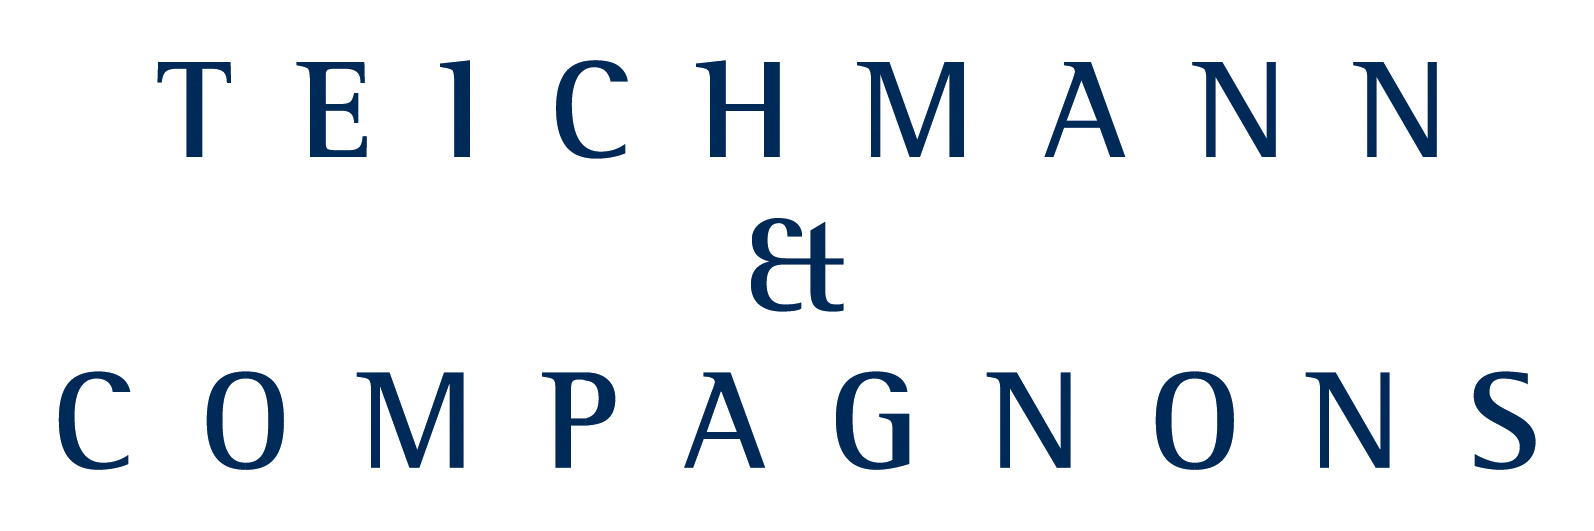 Teichmann et Compagnons Property Networks 